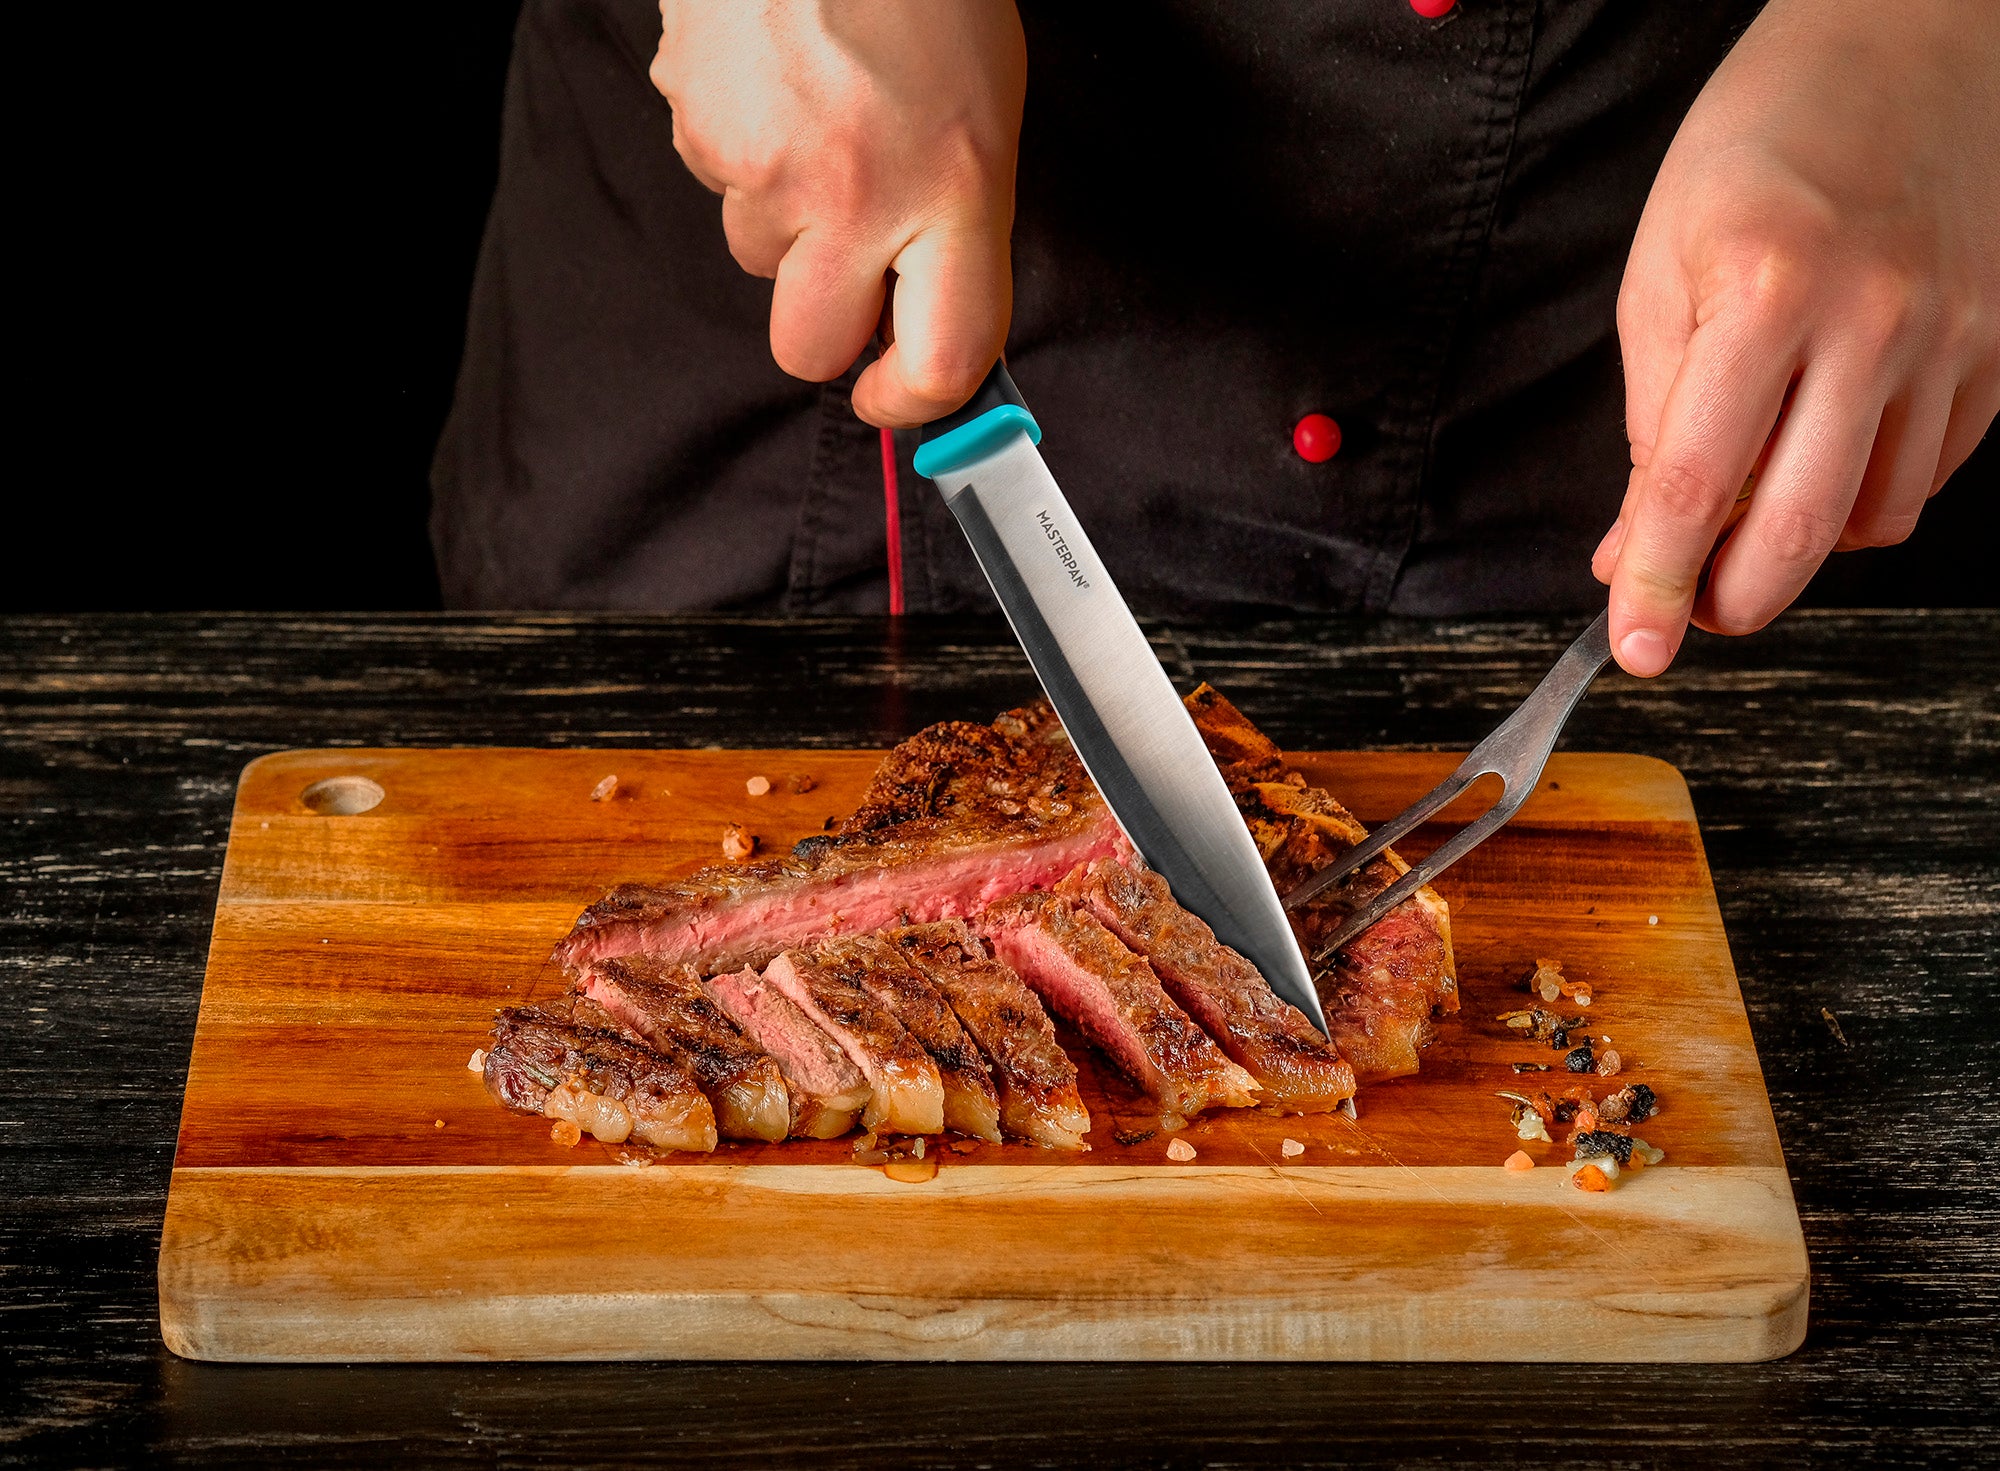 MasterChef Knives  12 Professional Chef Knives - Fusion Layers